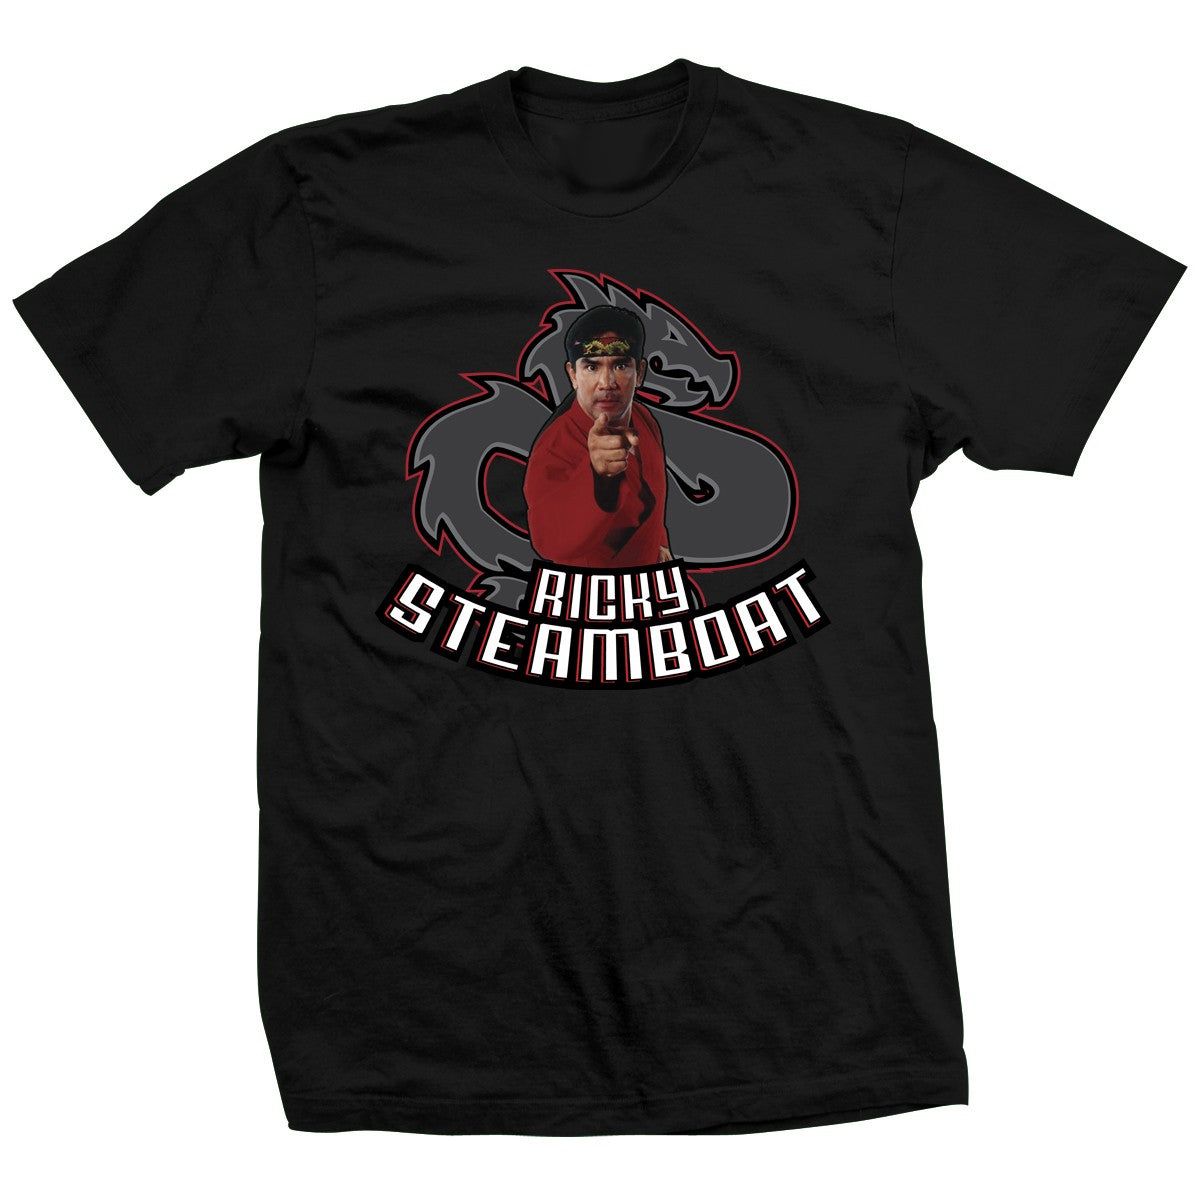 Ricky Steamboat Dark Dragon T-Shirt